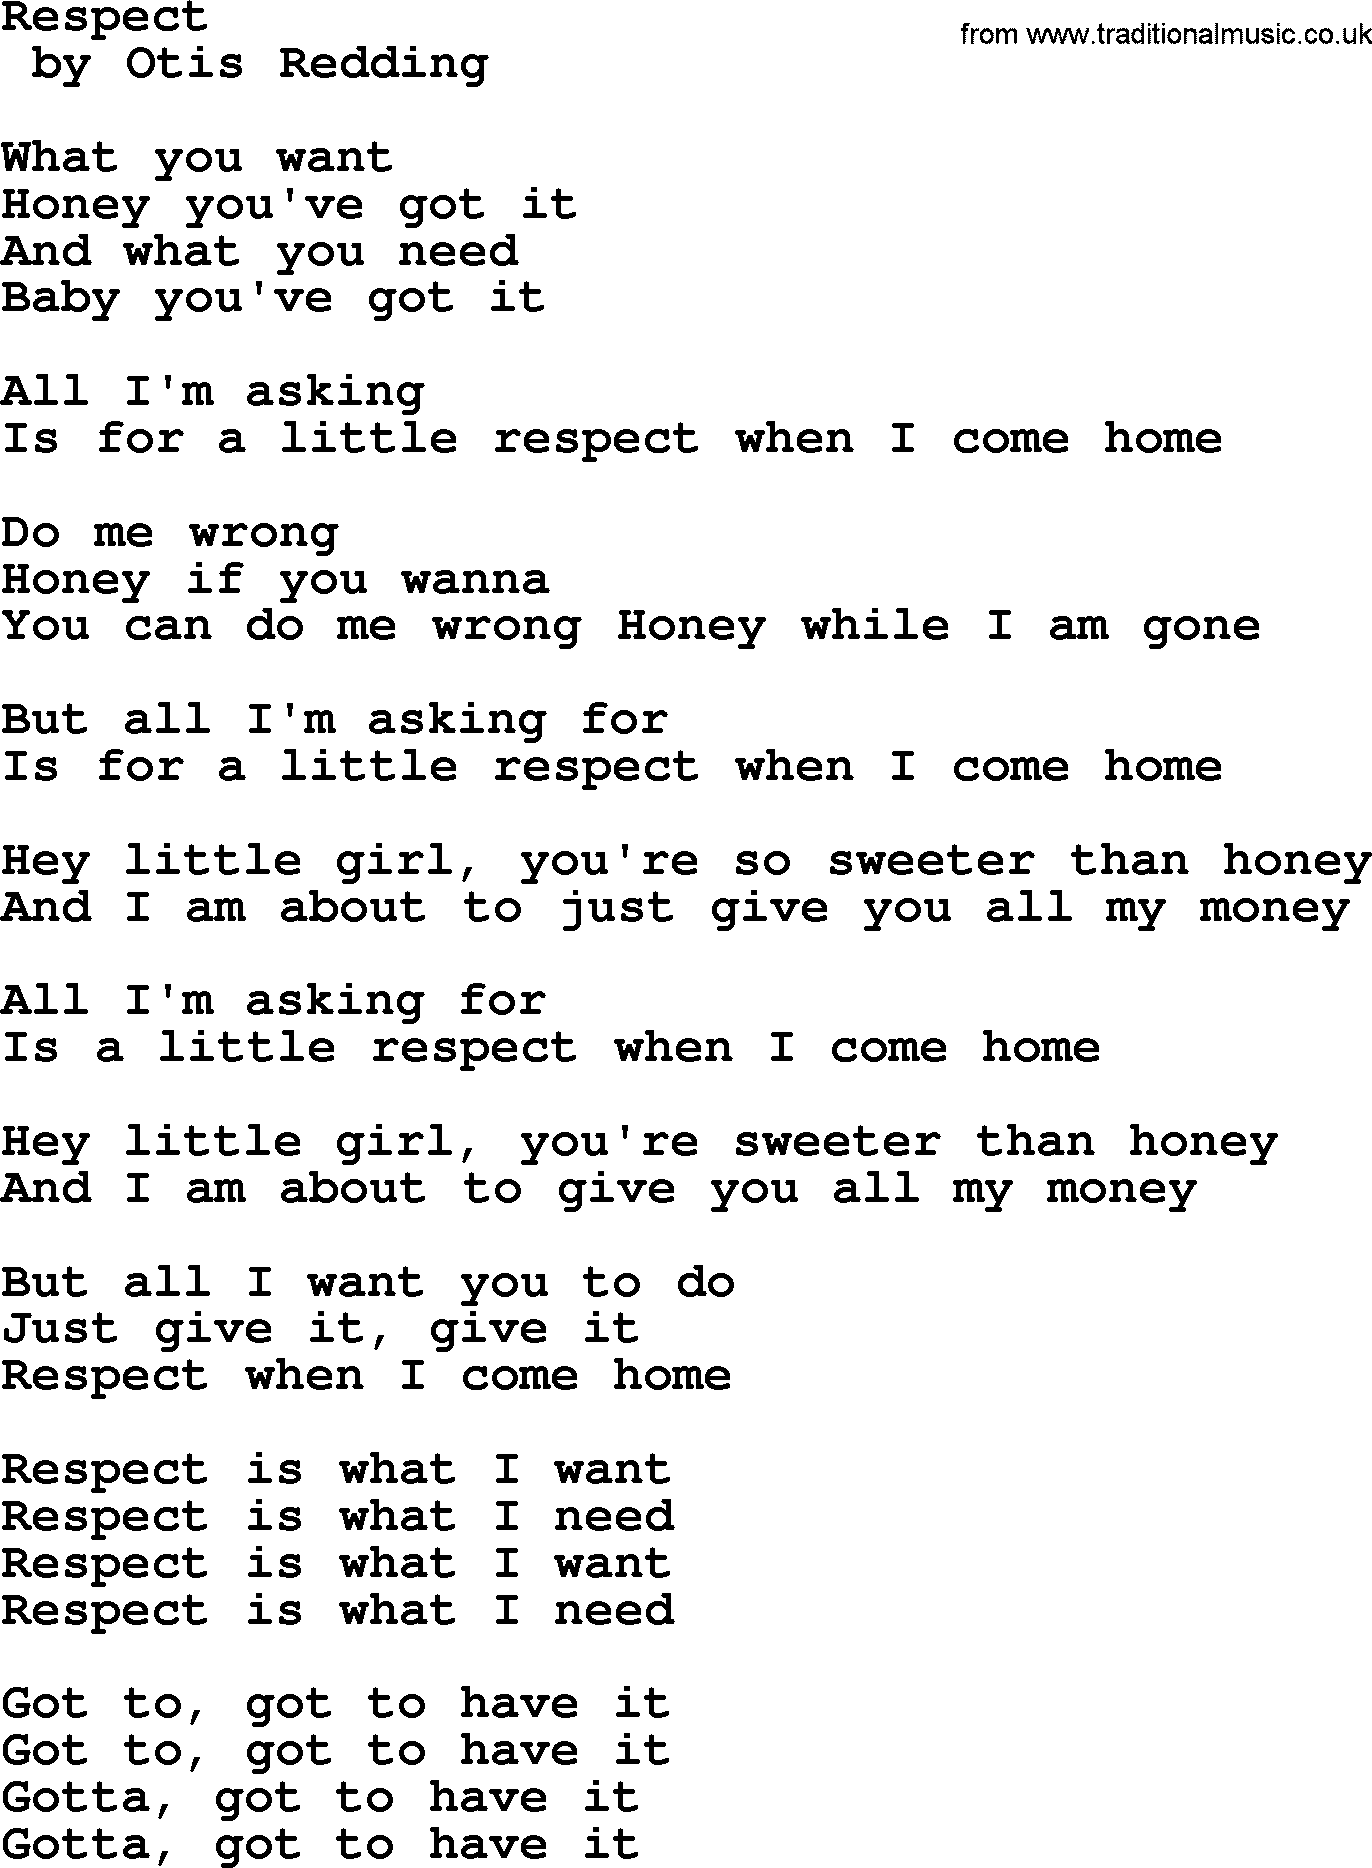 Bruce Springsteen song: Respect lyrics